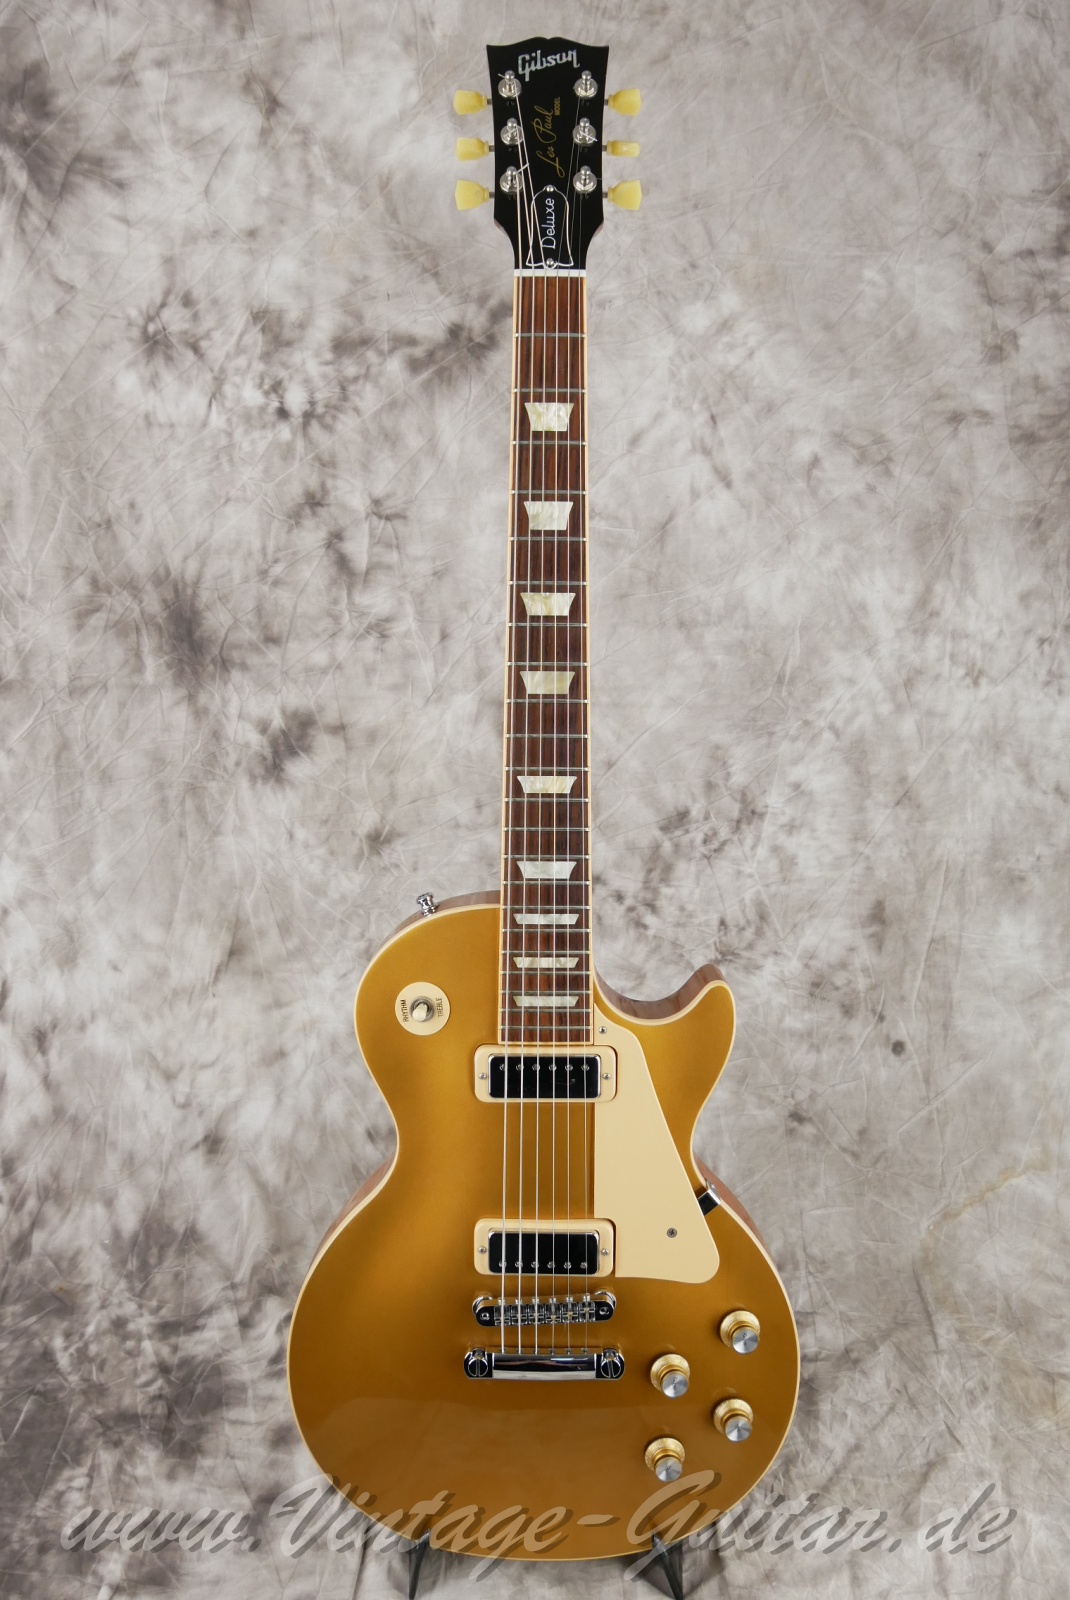 Gibson_Les_Paul_Deluxe_goldtop_Baujahr_2011_USA-001.jpg